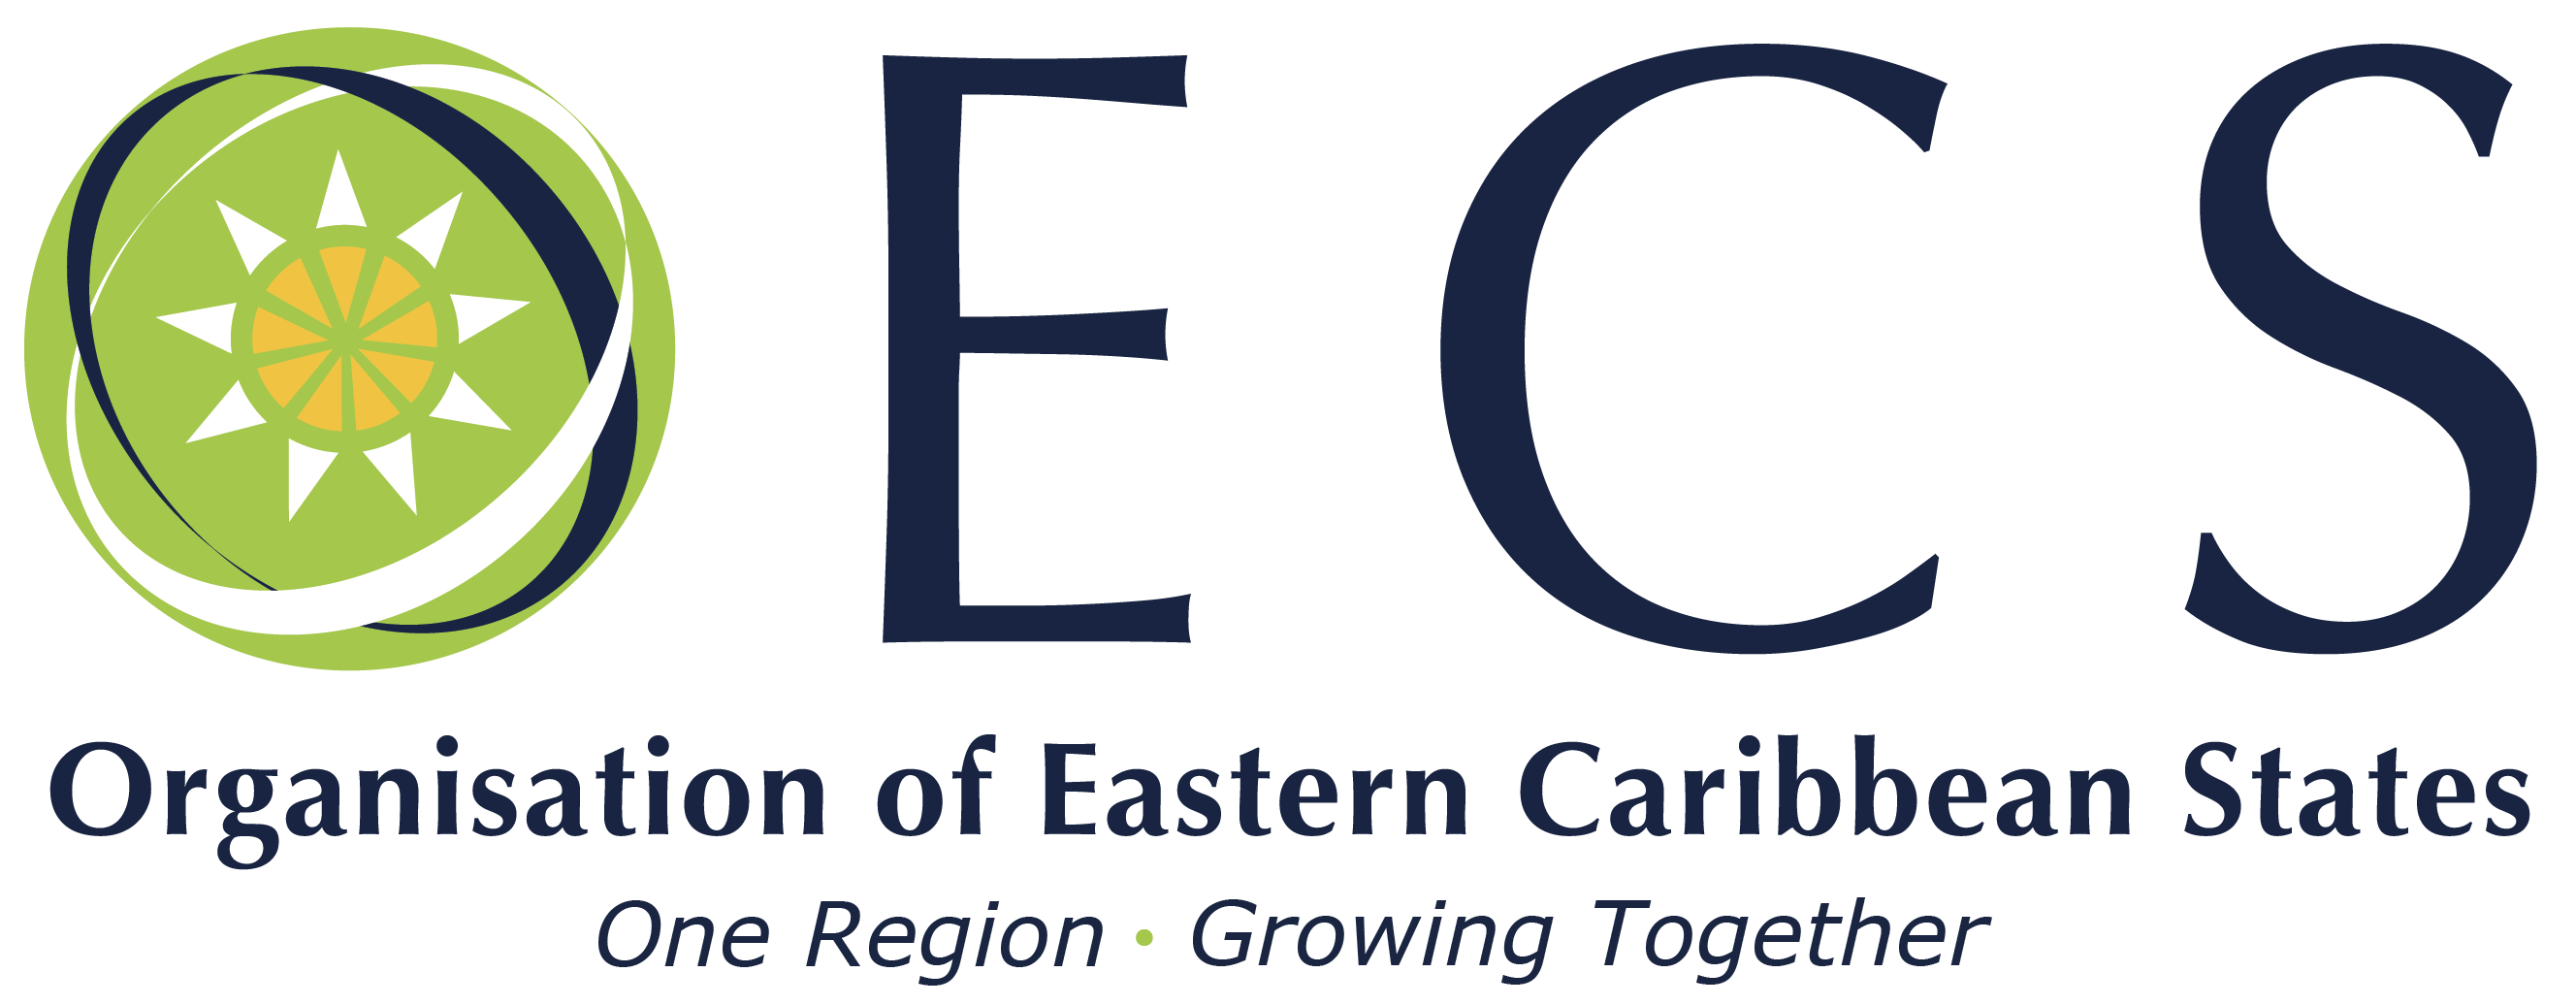 Organisation of Eastern Caribbean States (OECS) Logo